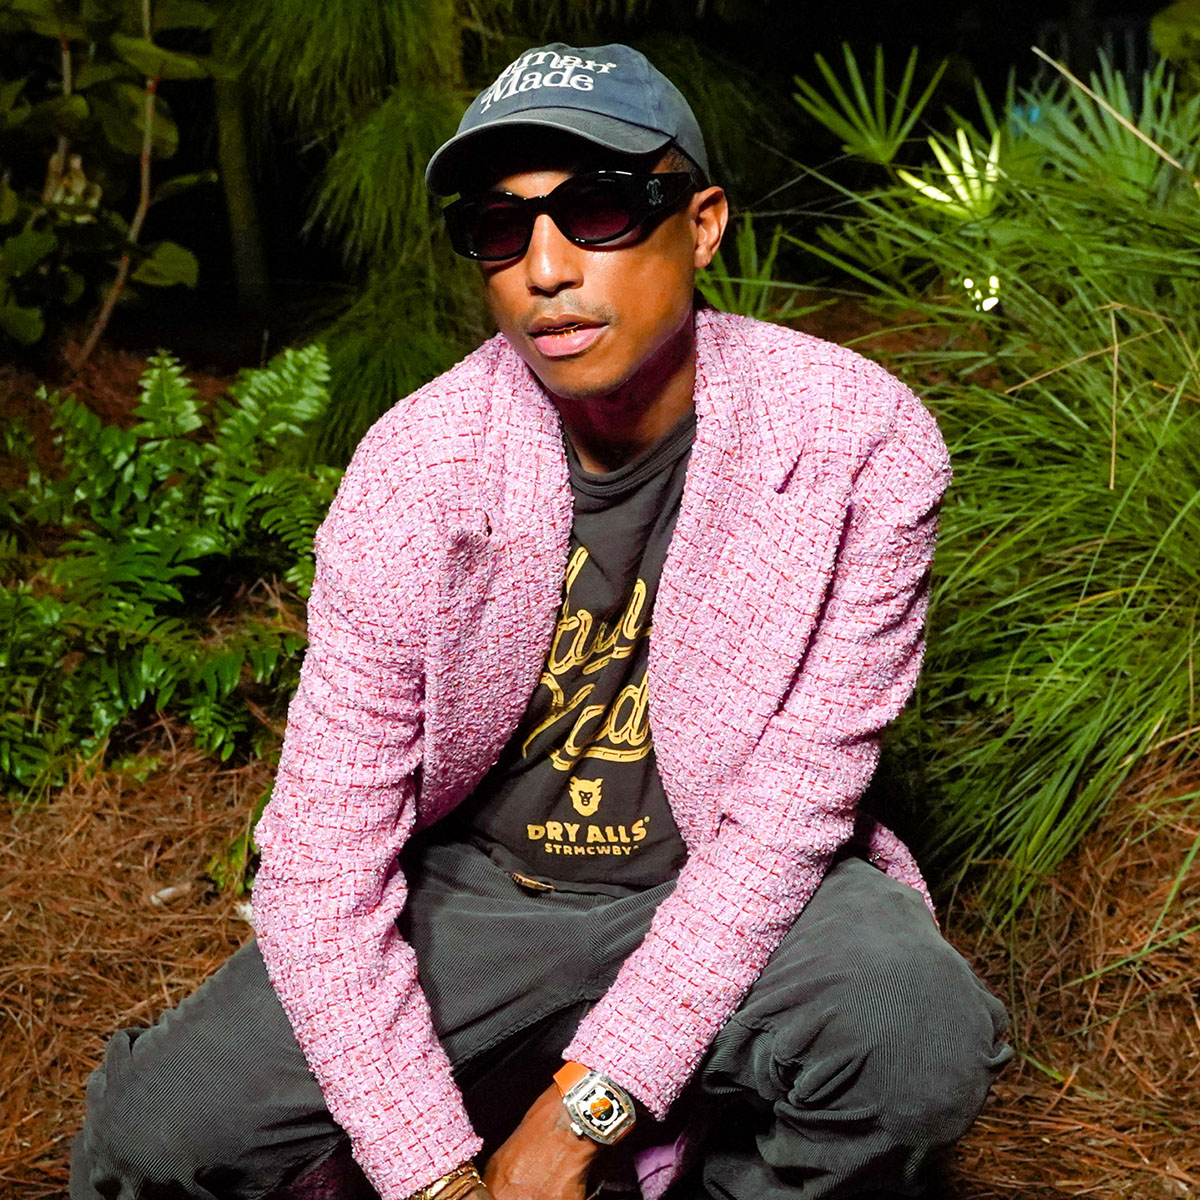 pharrell now pharrell in 20 years